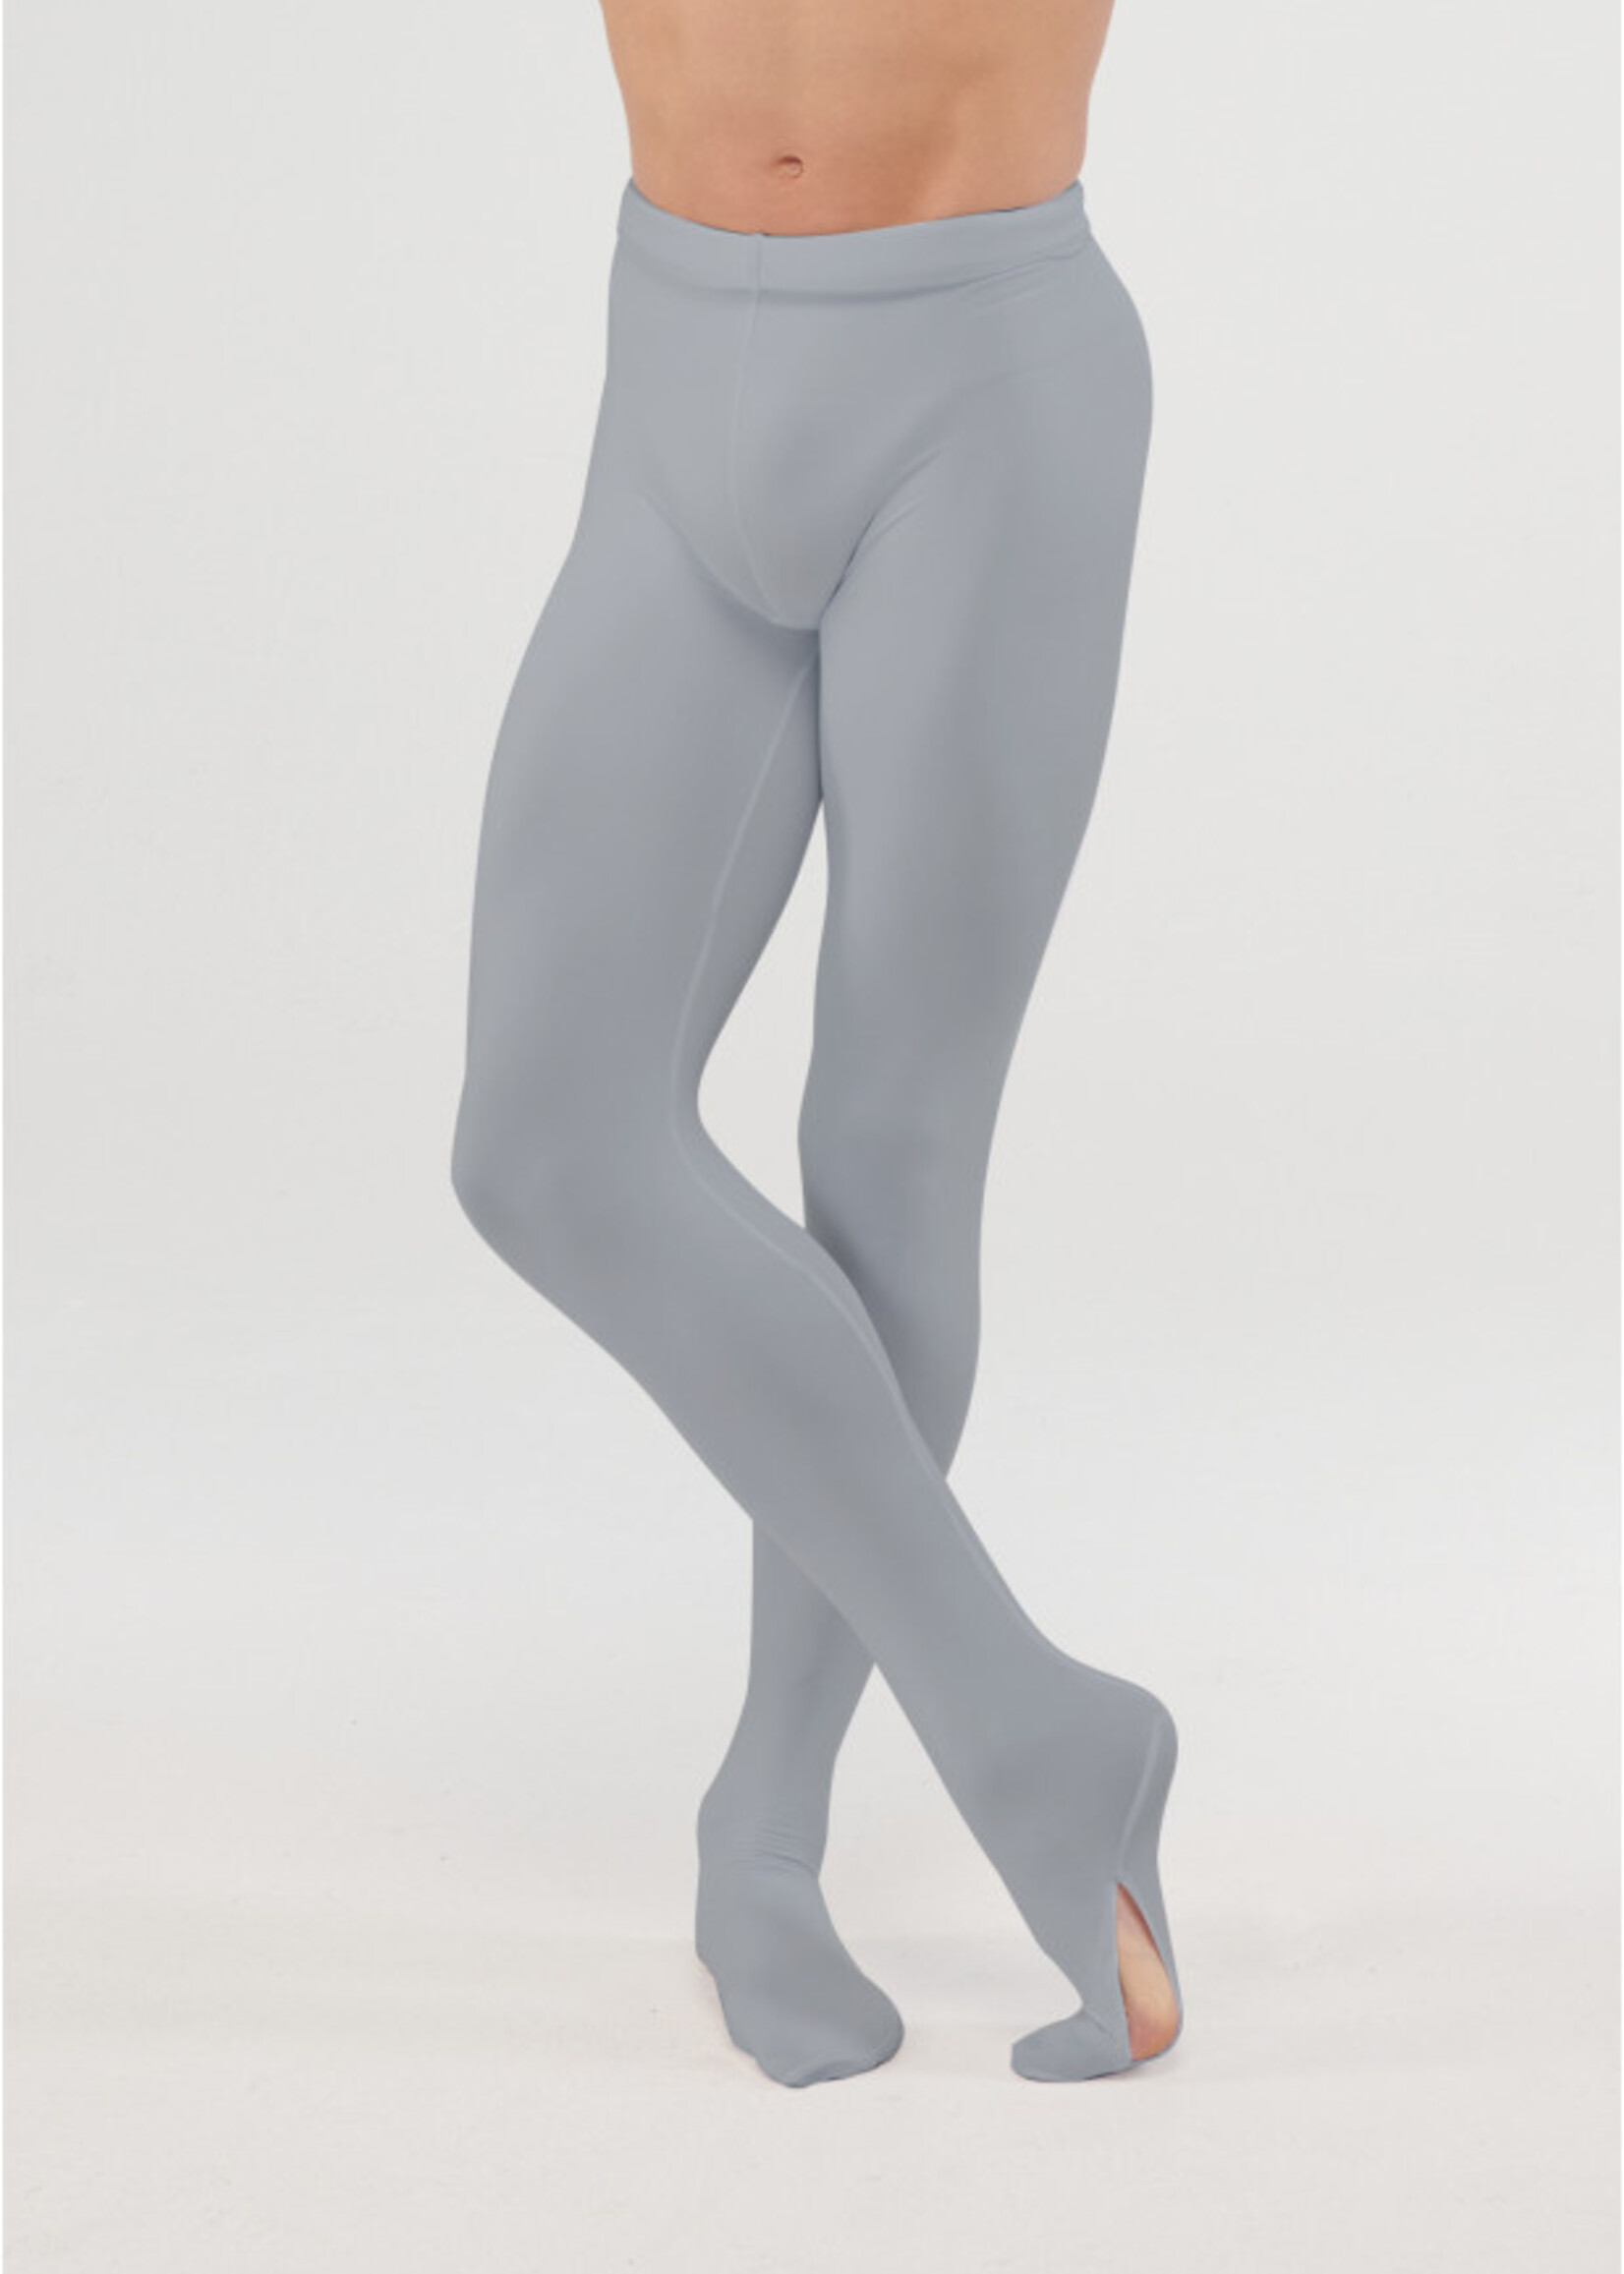 Wear Moi Boys Microfiber Footless Tights - Amazing Dancewear!